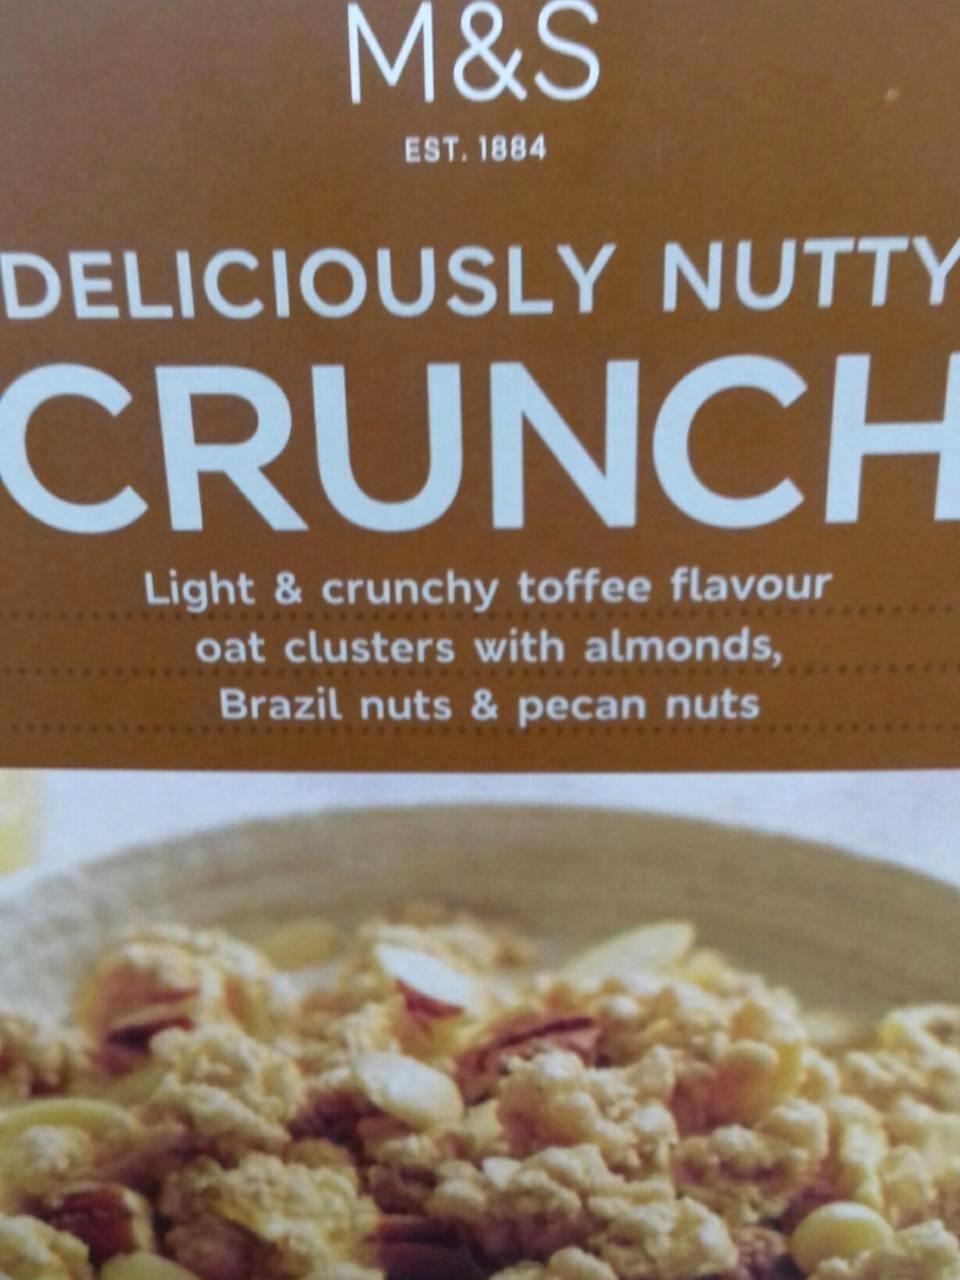 Képek - Deliciously nutty crunch M&S